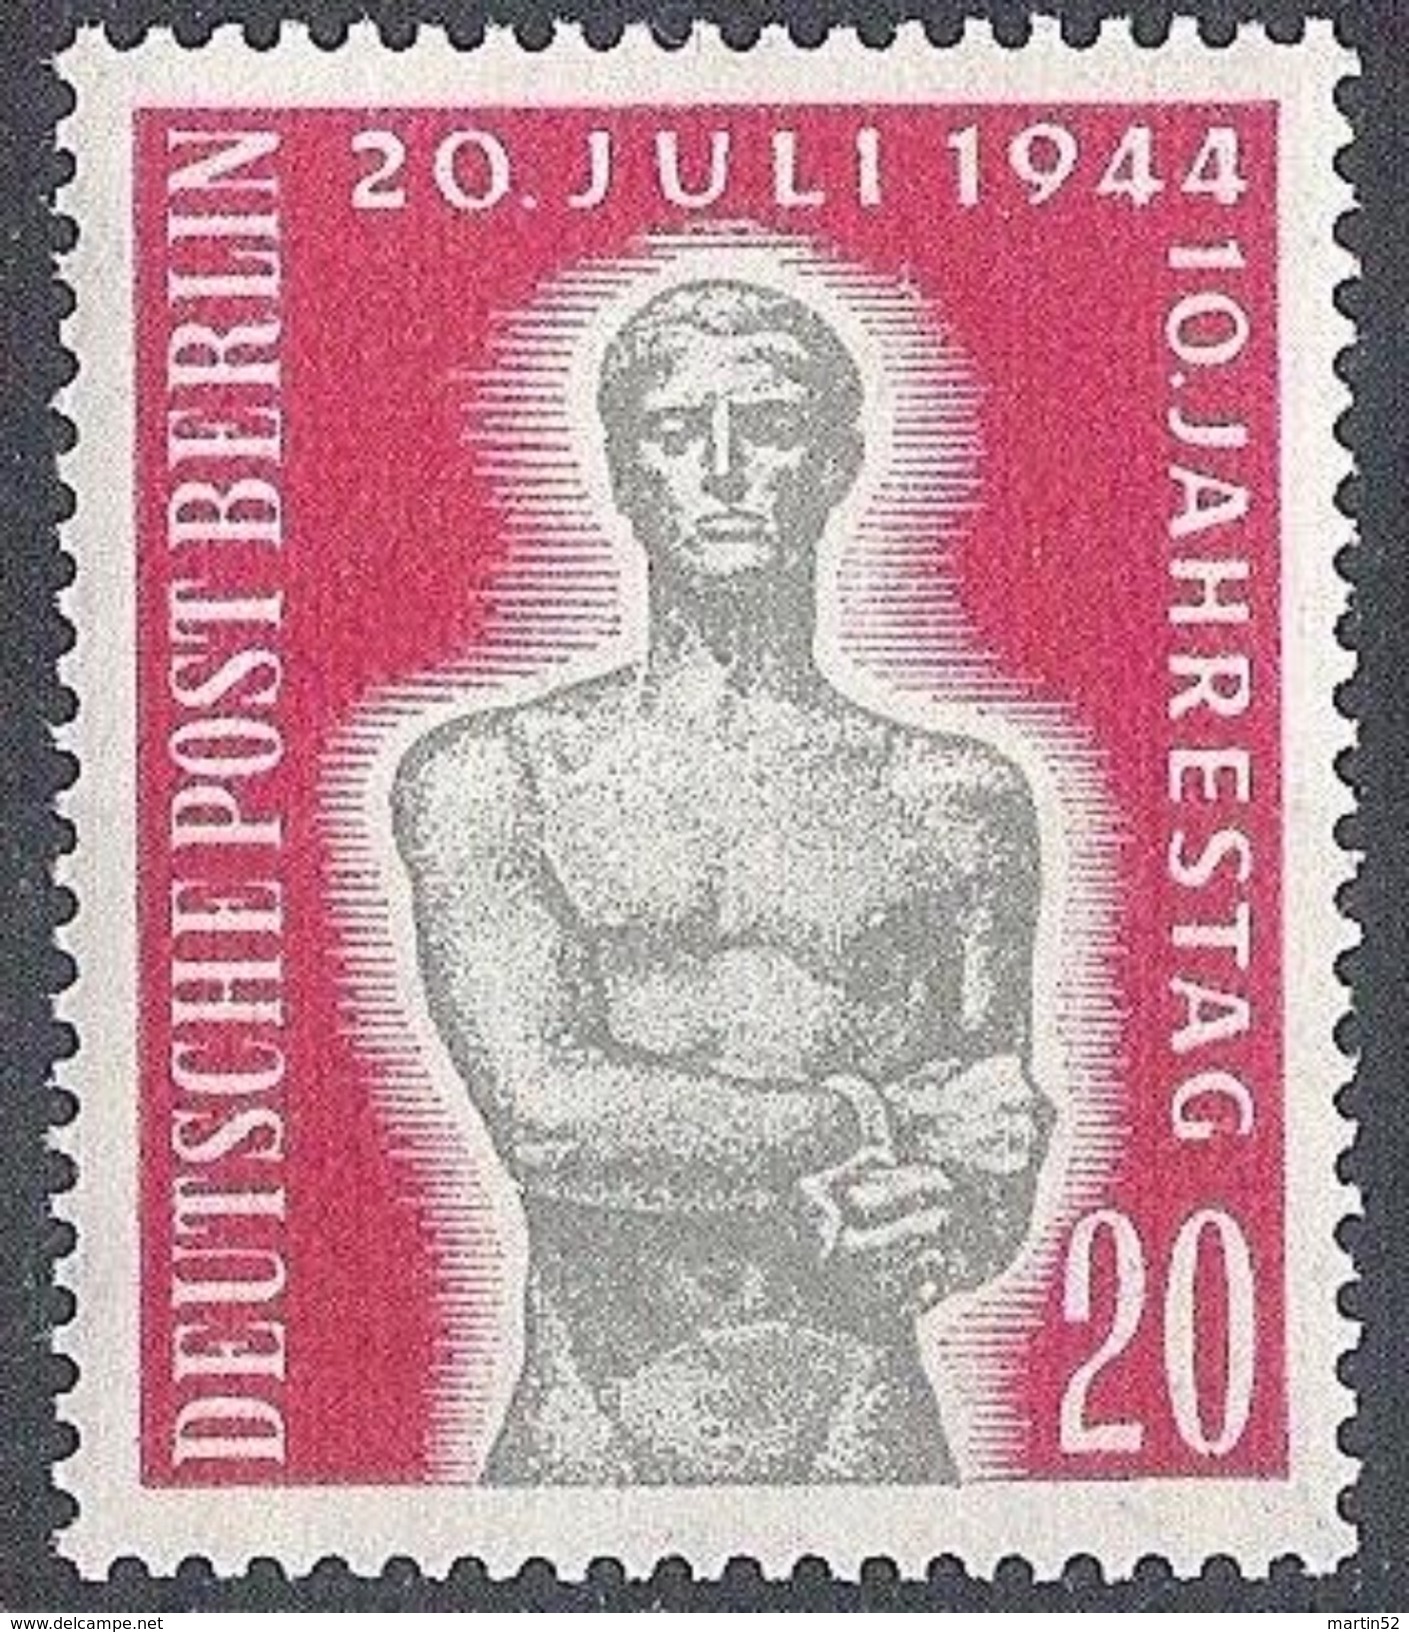 Berlin 1954: "20 JULI 1944" (Denkmal) Michel-Nr. 119 ** Postfrisch MNH (Michel 6.50 Euro) - Monuments